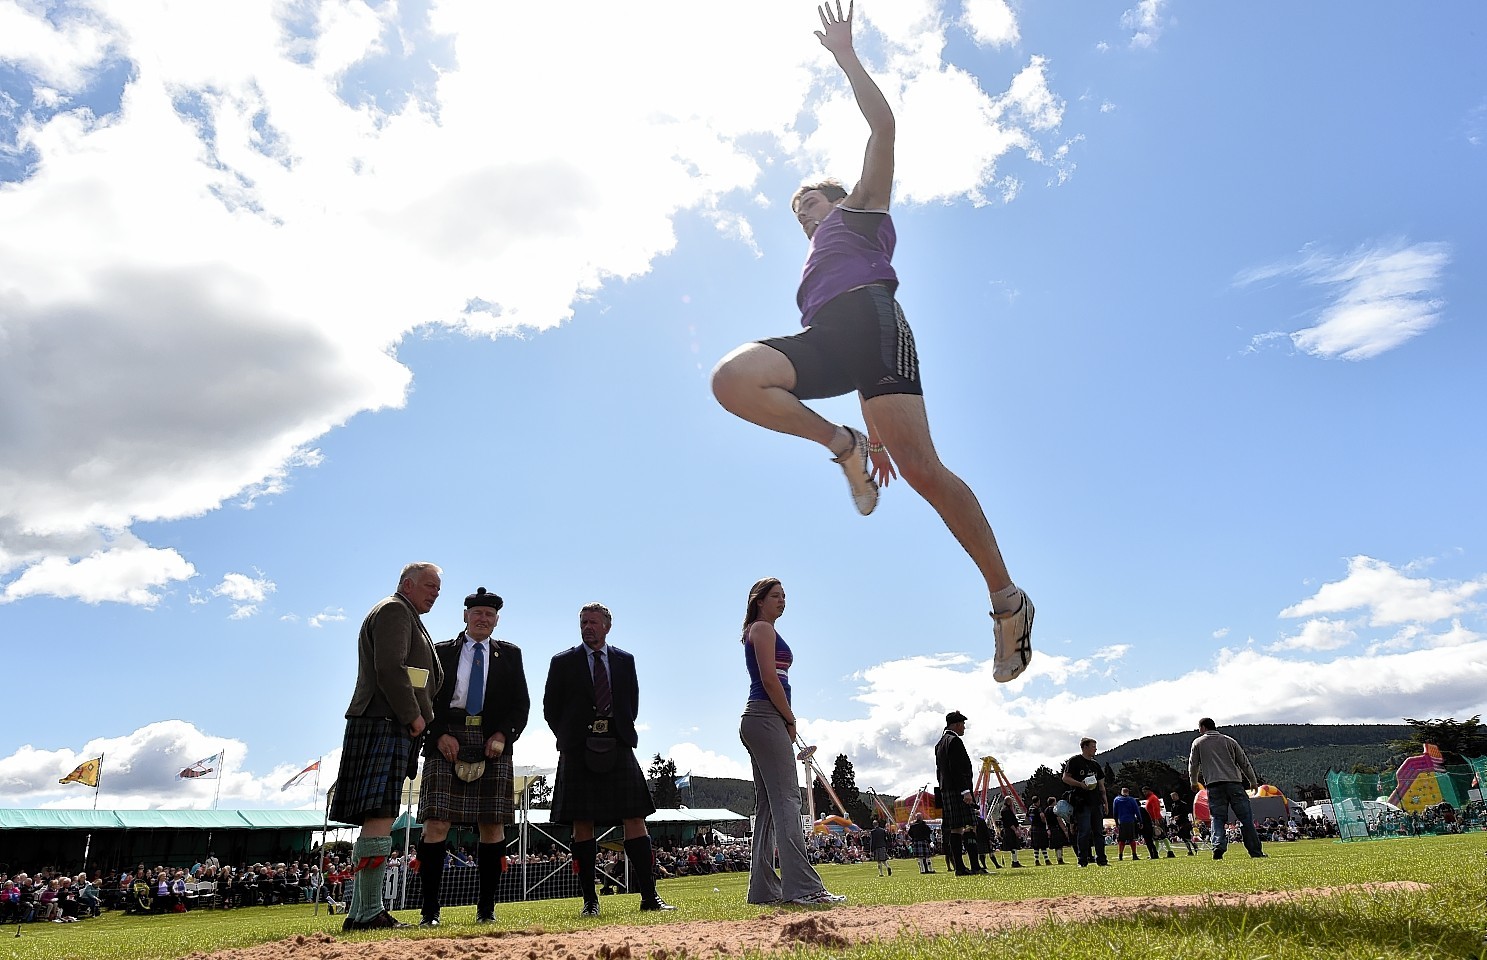 Aboyne Highland Games - The long jump Sam Lyon from Aberdeen.